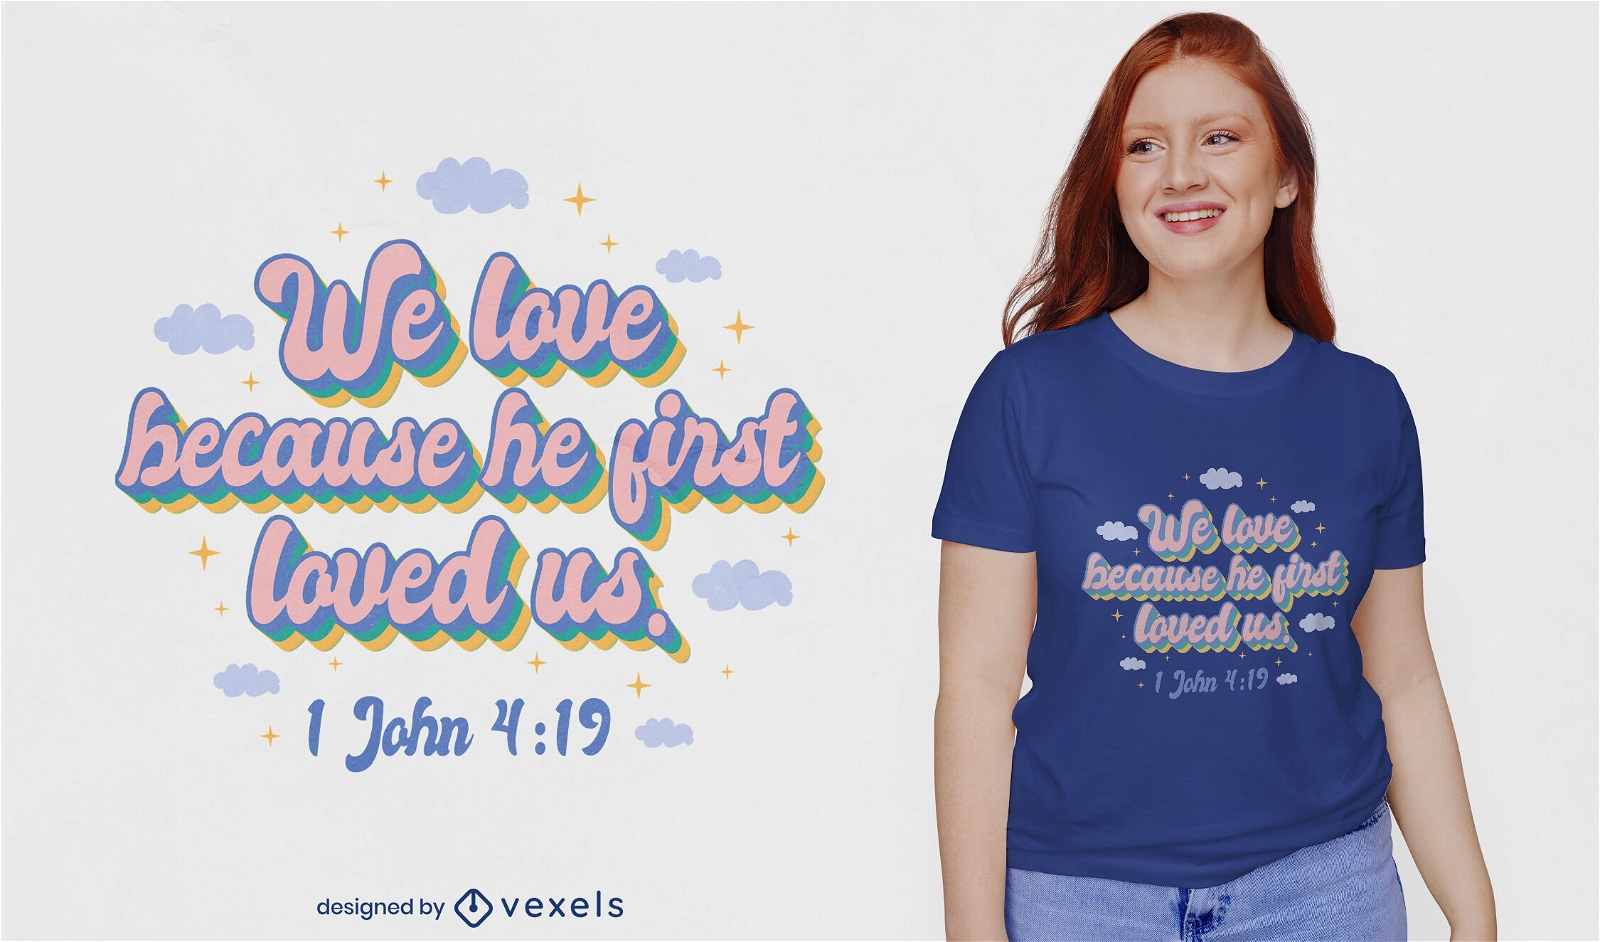 Christian religion quote t-shirt design